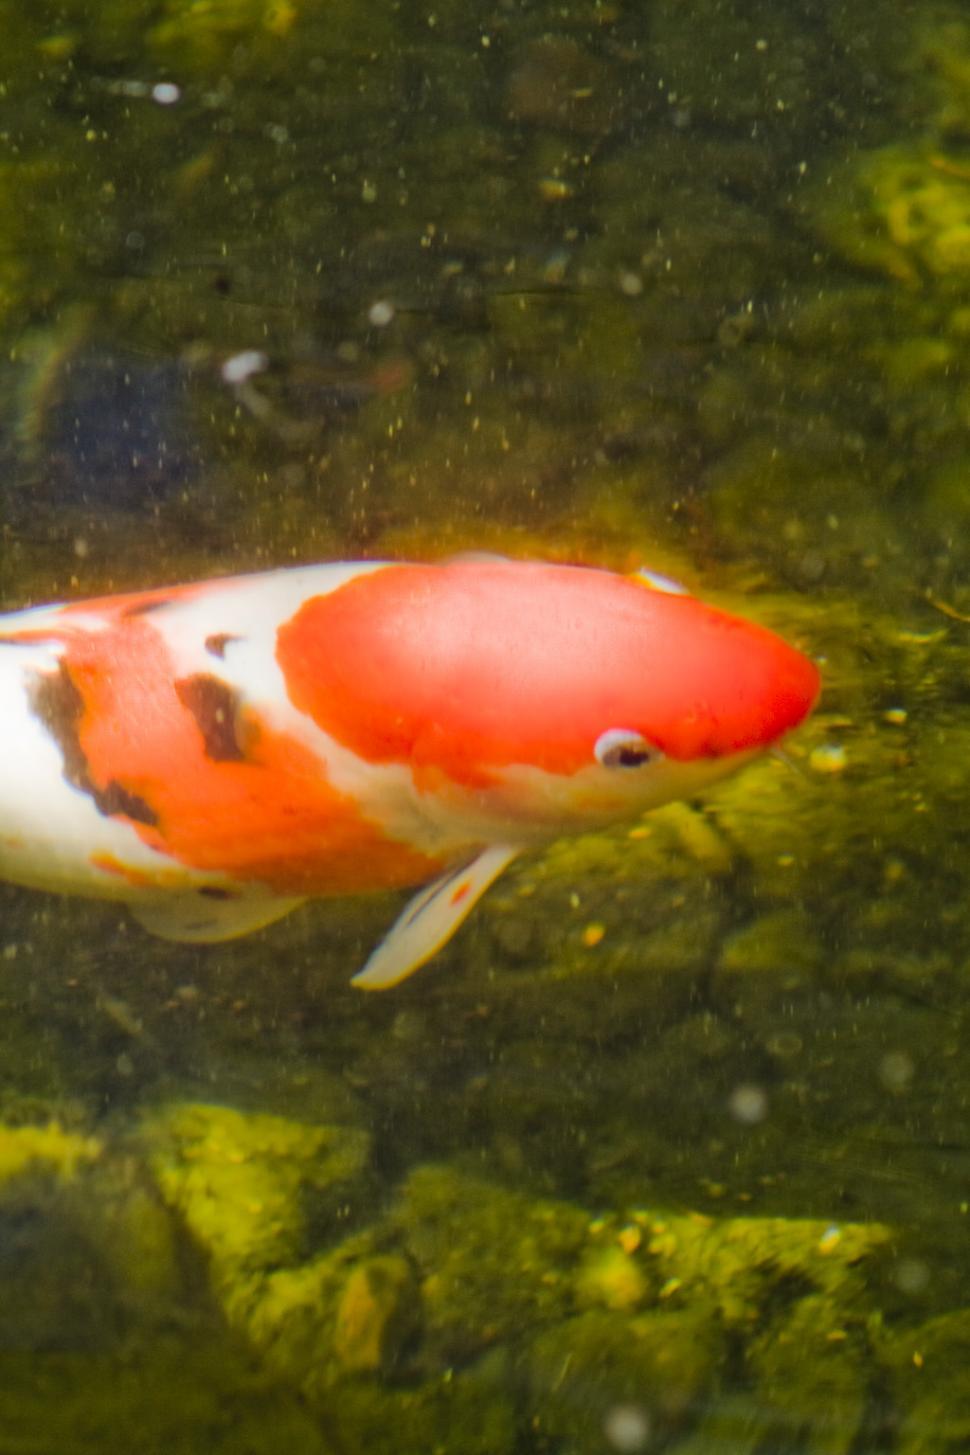 Free Image of Orange and White Fish Swimming in Pond 